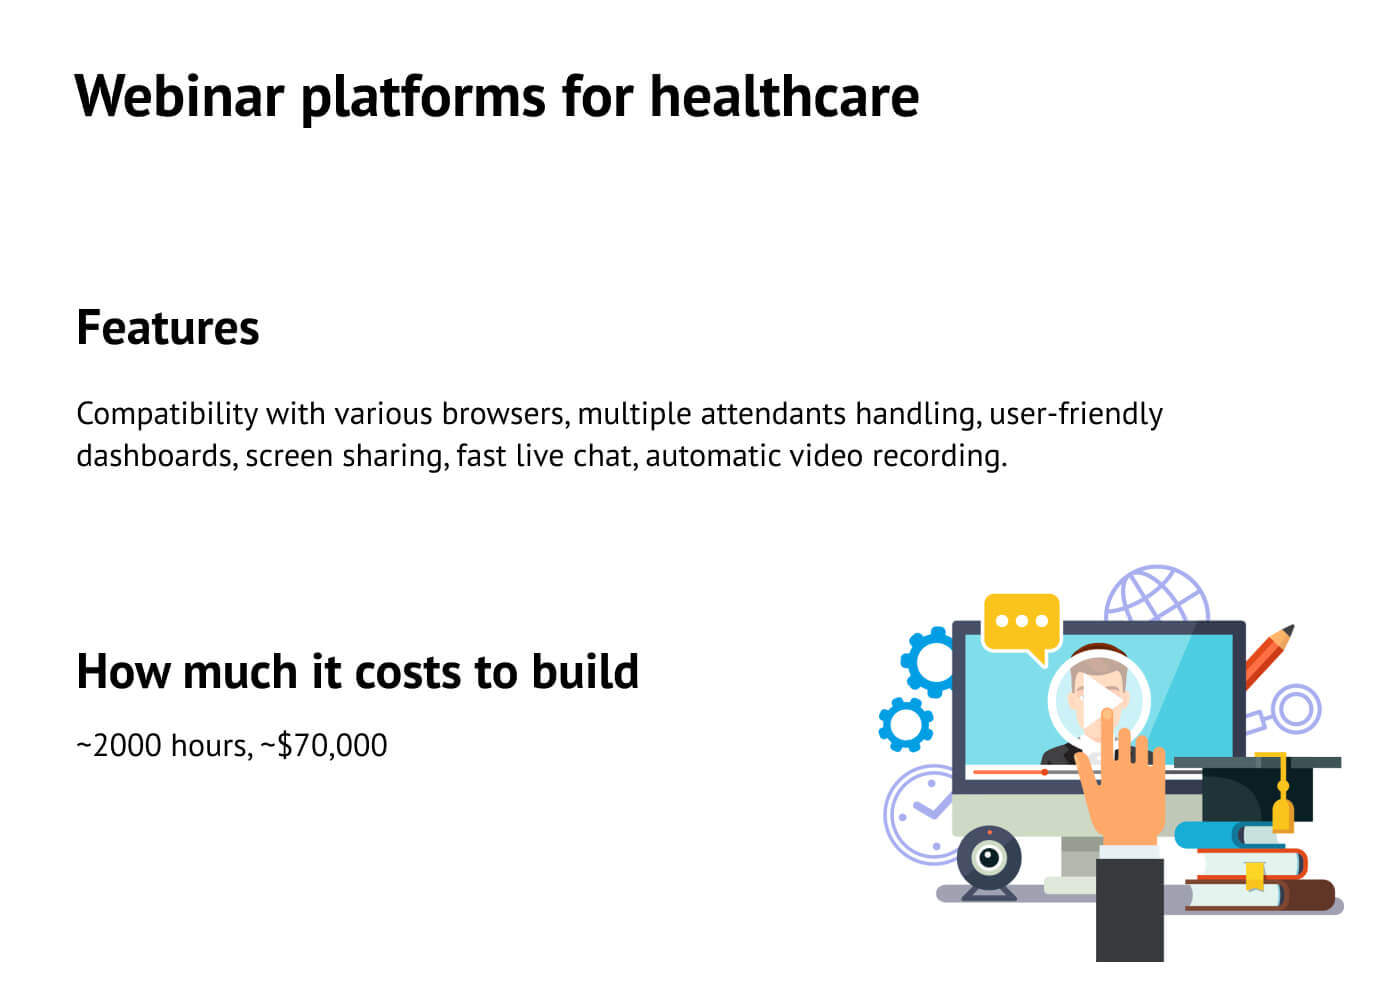 Webinar platforms for healthcare education